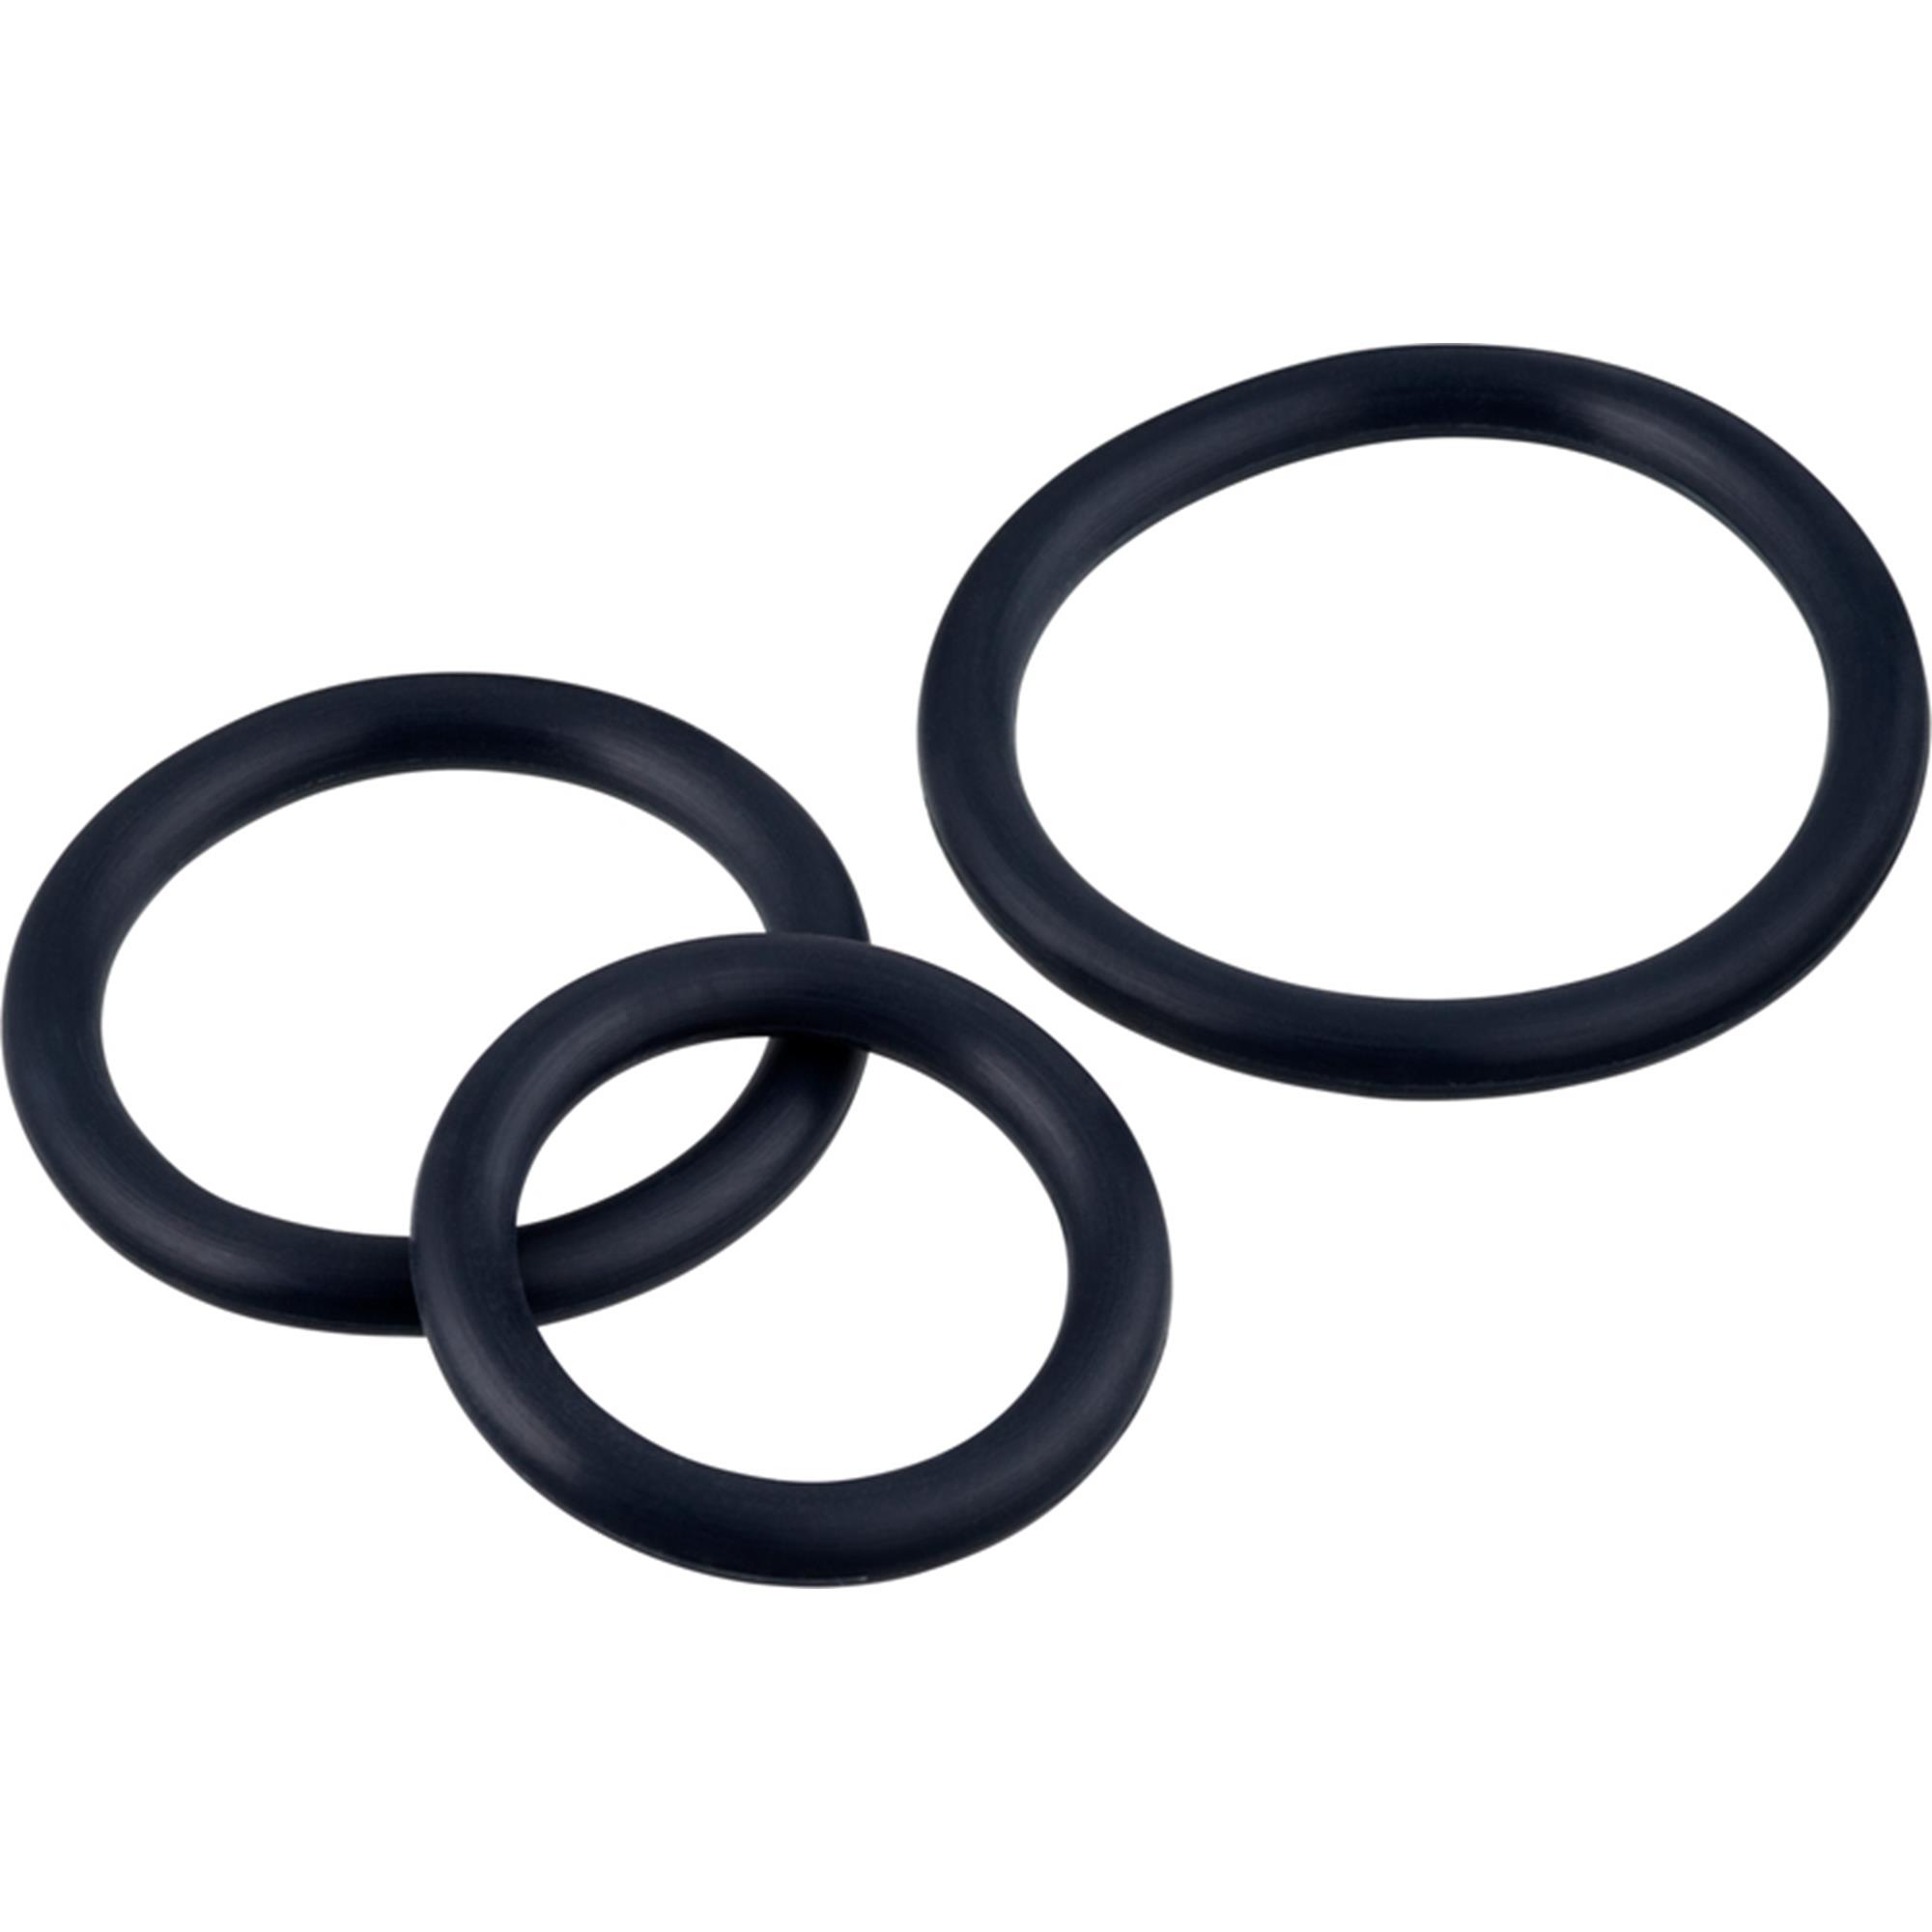 RFSU Pleasure Rings Penis Ring Set, 3-pack Black | Penisring utan vibration | Intimast